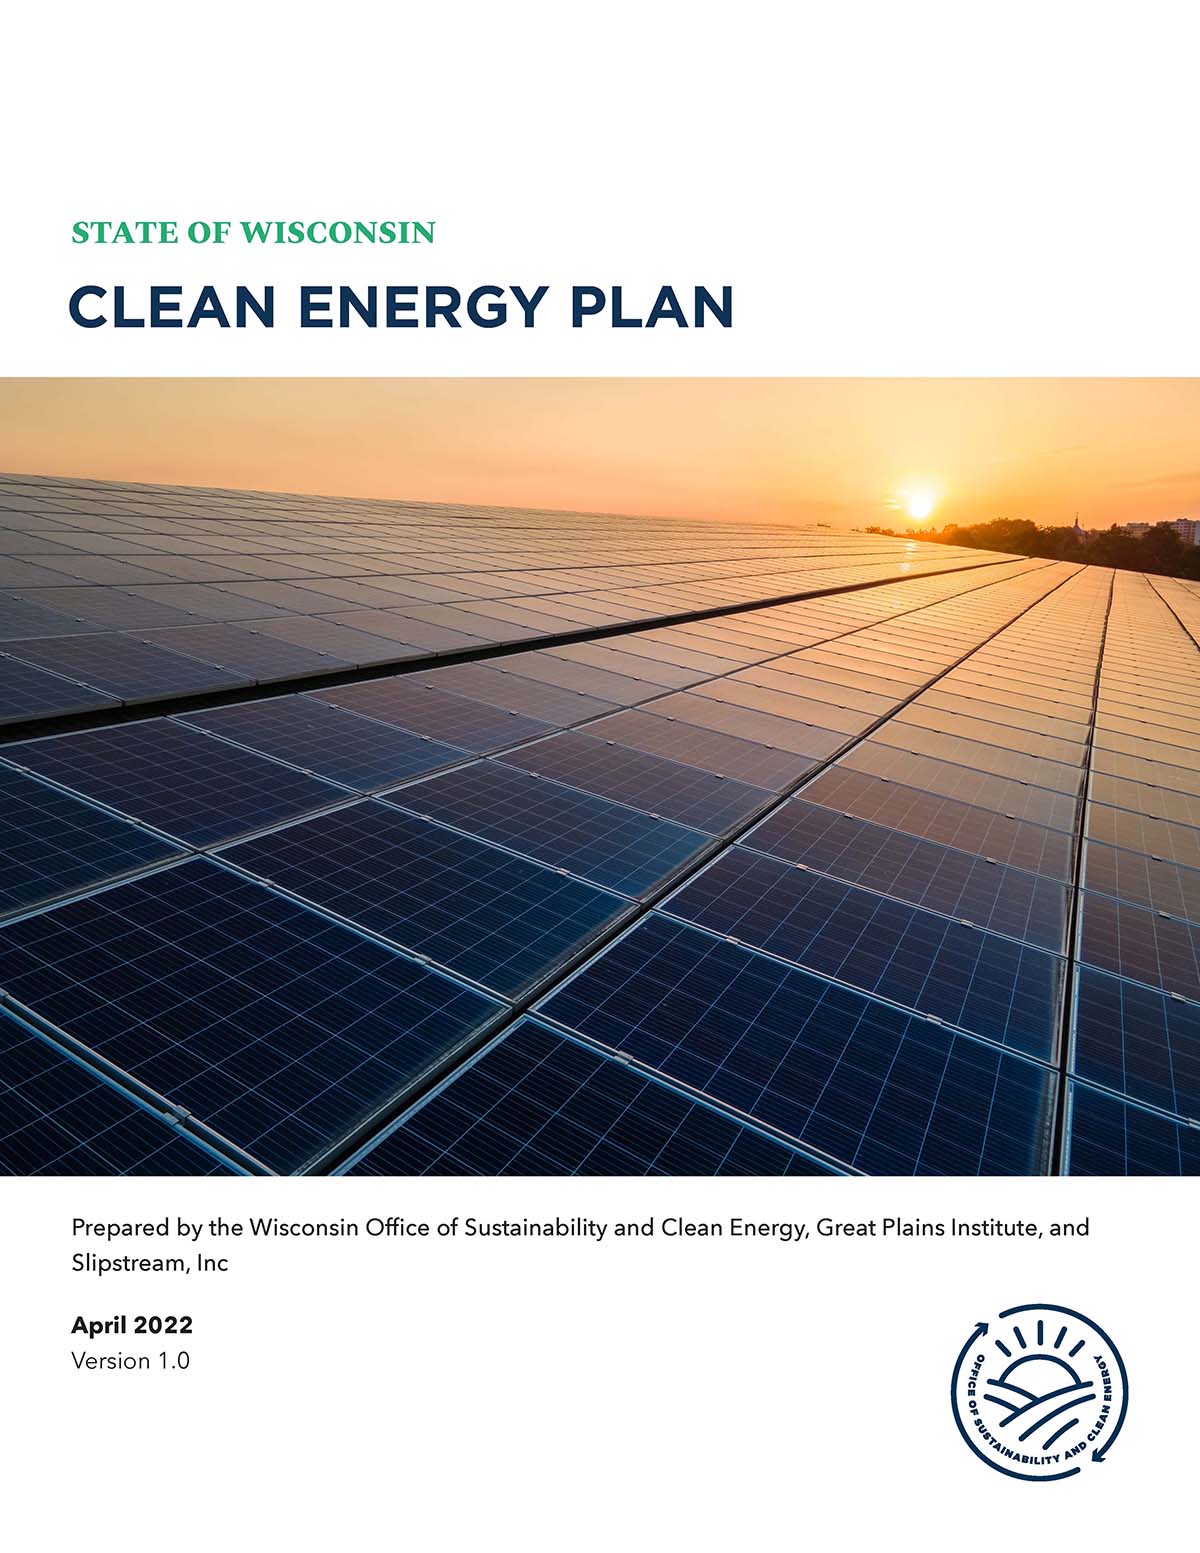 Clean Energy Plan 2022